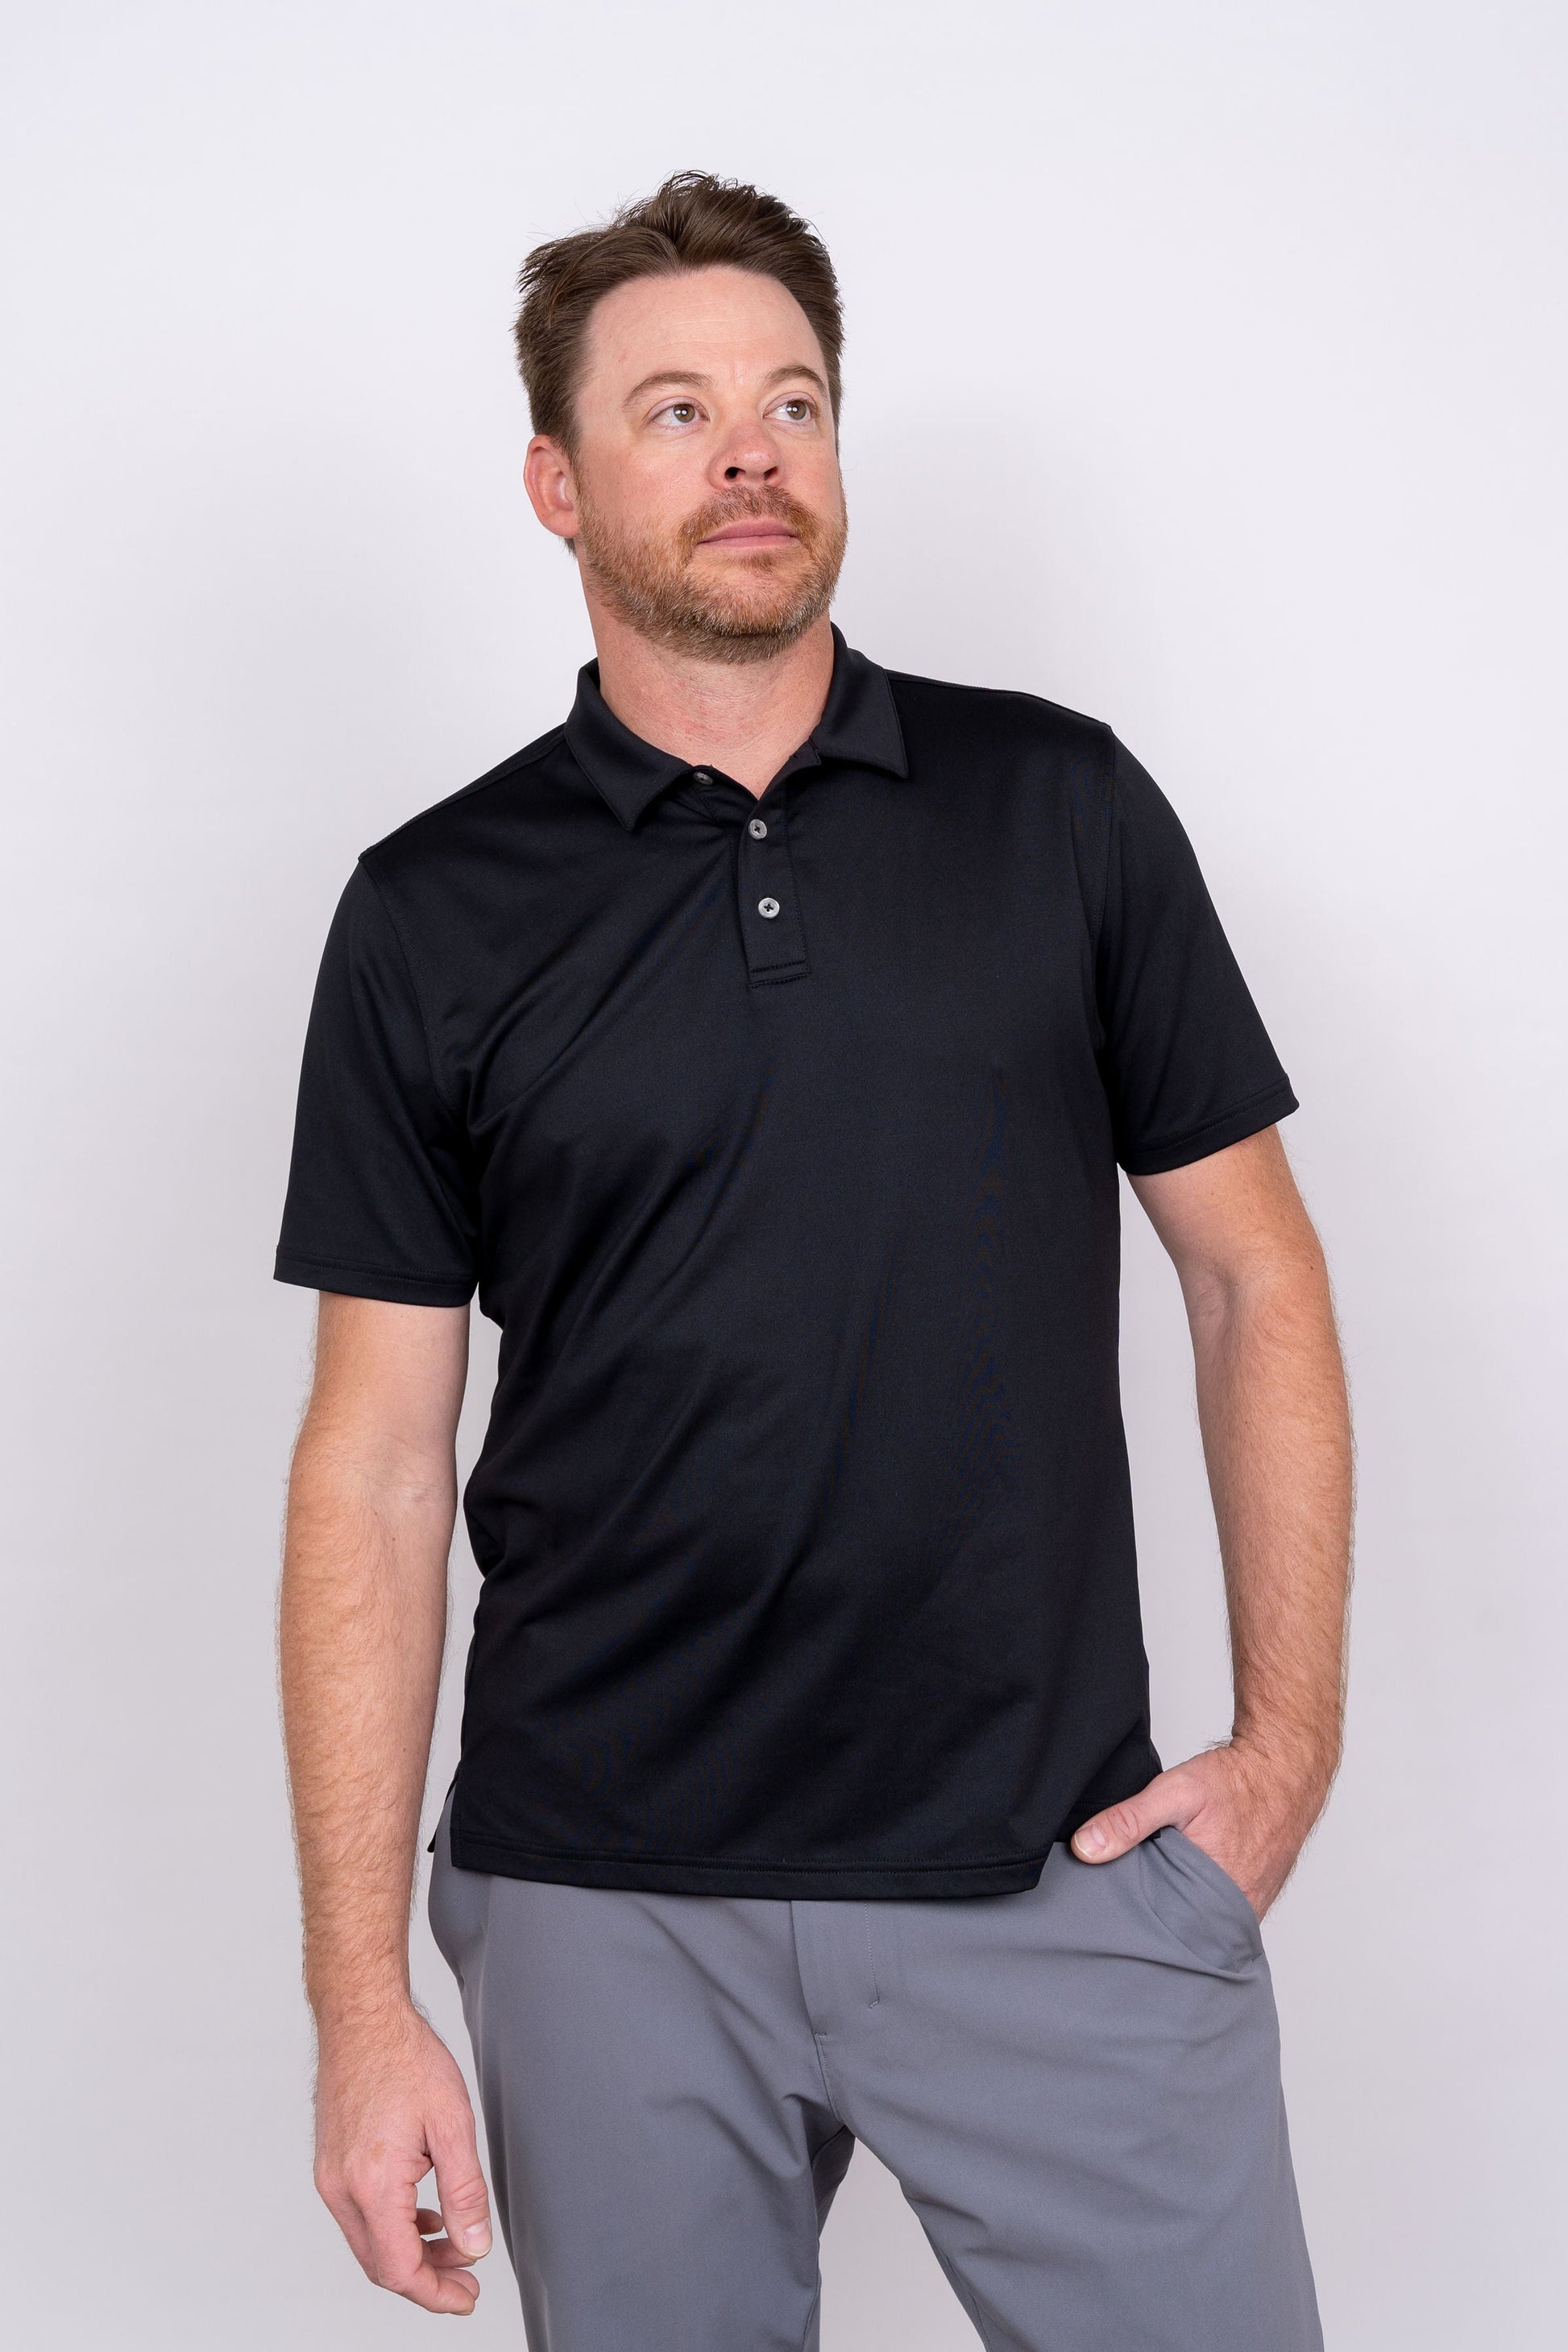 TJ Golf Shirt 2.0 - Black Men's Golf Shirt Taylor Jordan Apparel Small 